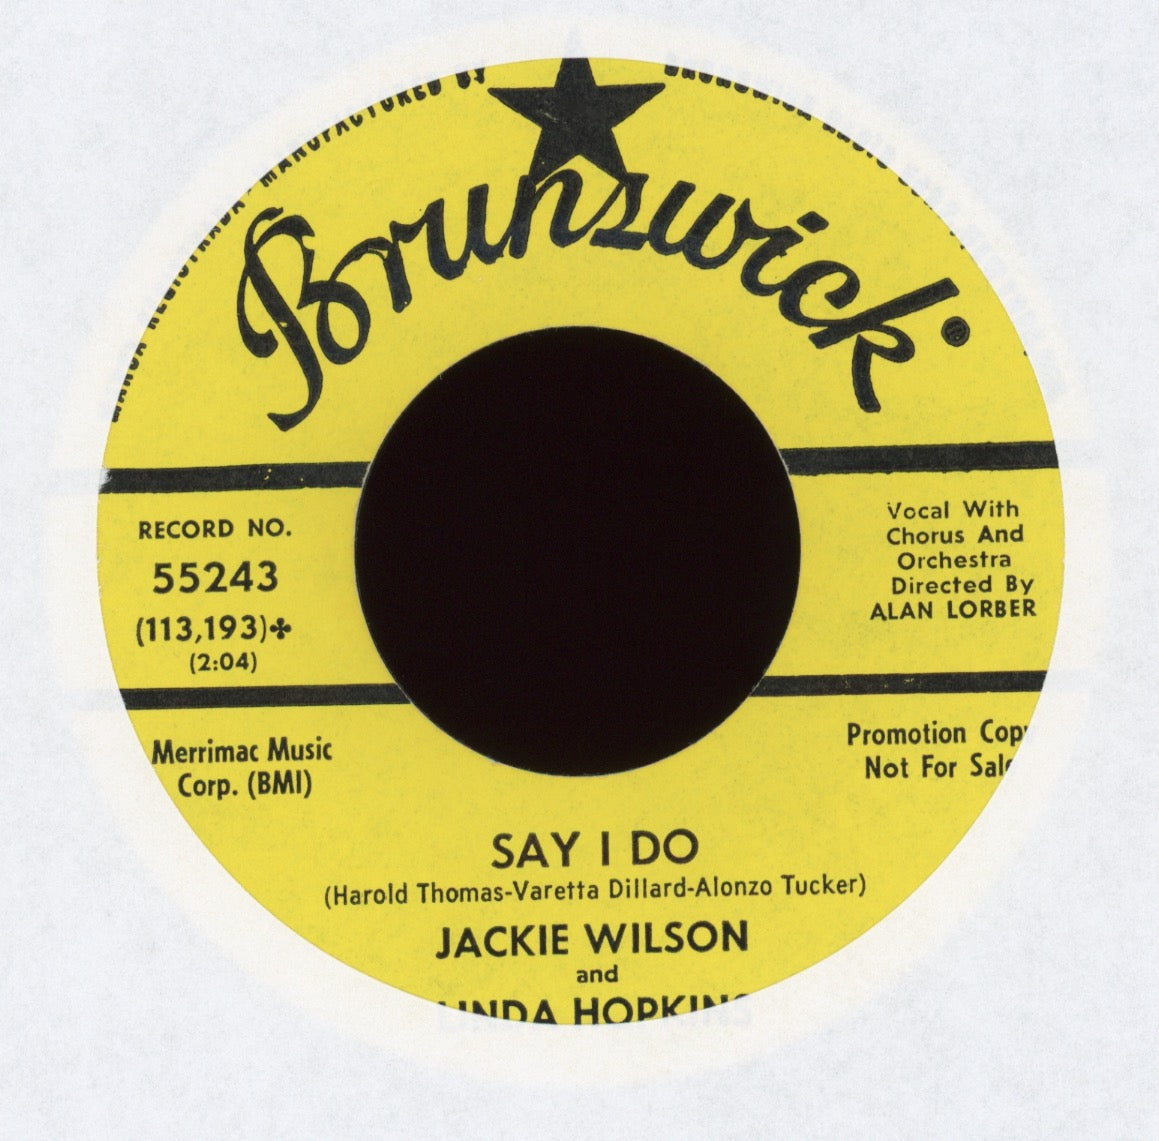 Jackie Wilson and Linda Hopkins - Say I Do on Brunswick Promo